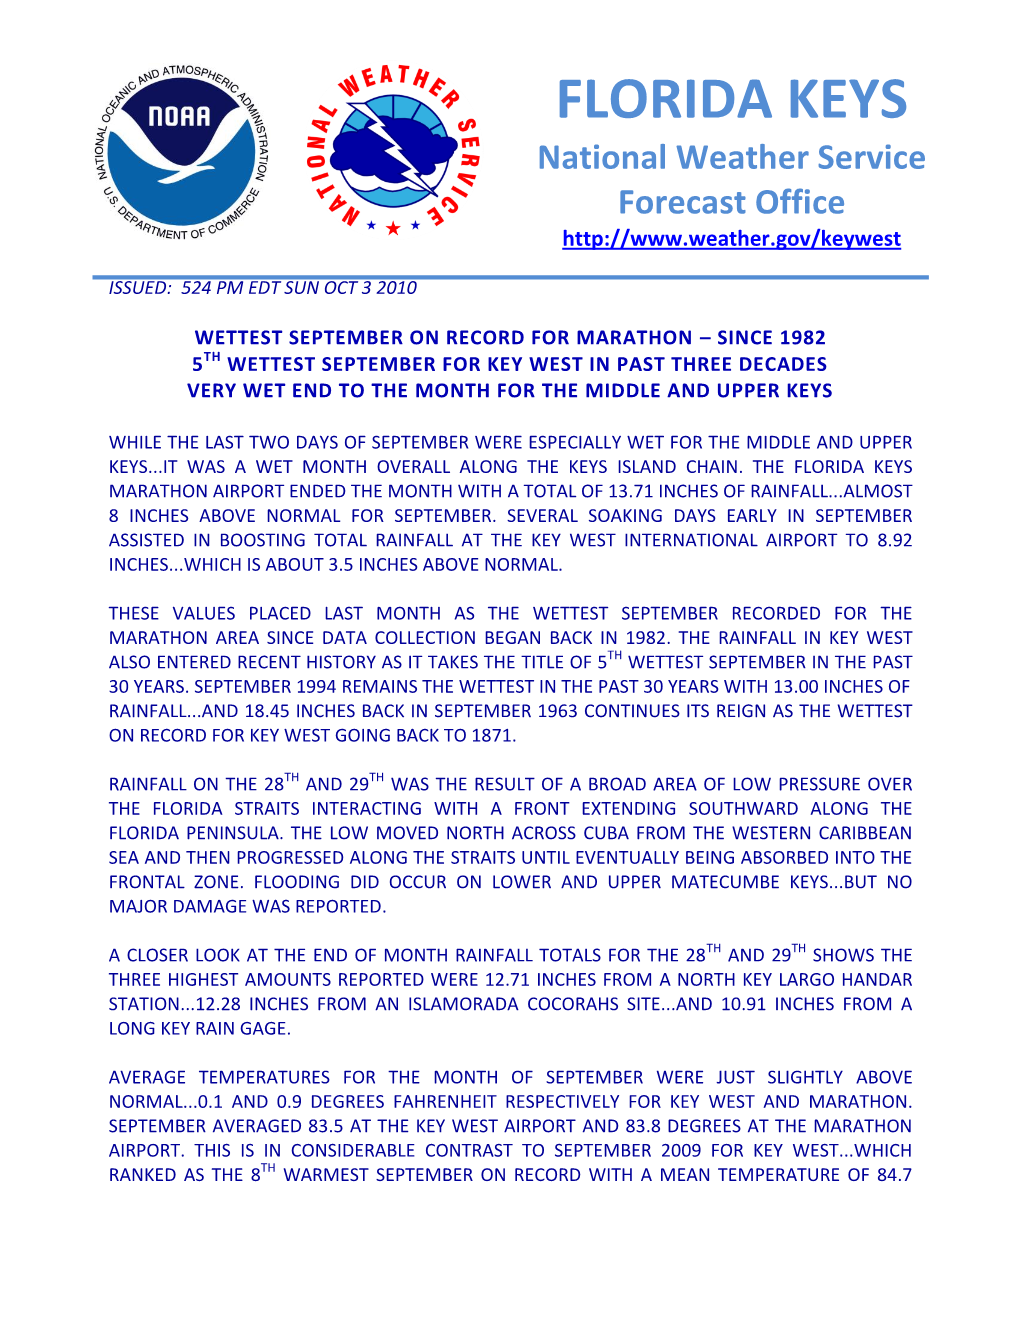 FLORIDA KEYS National Weather Service Forecast Office